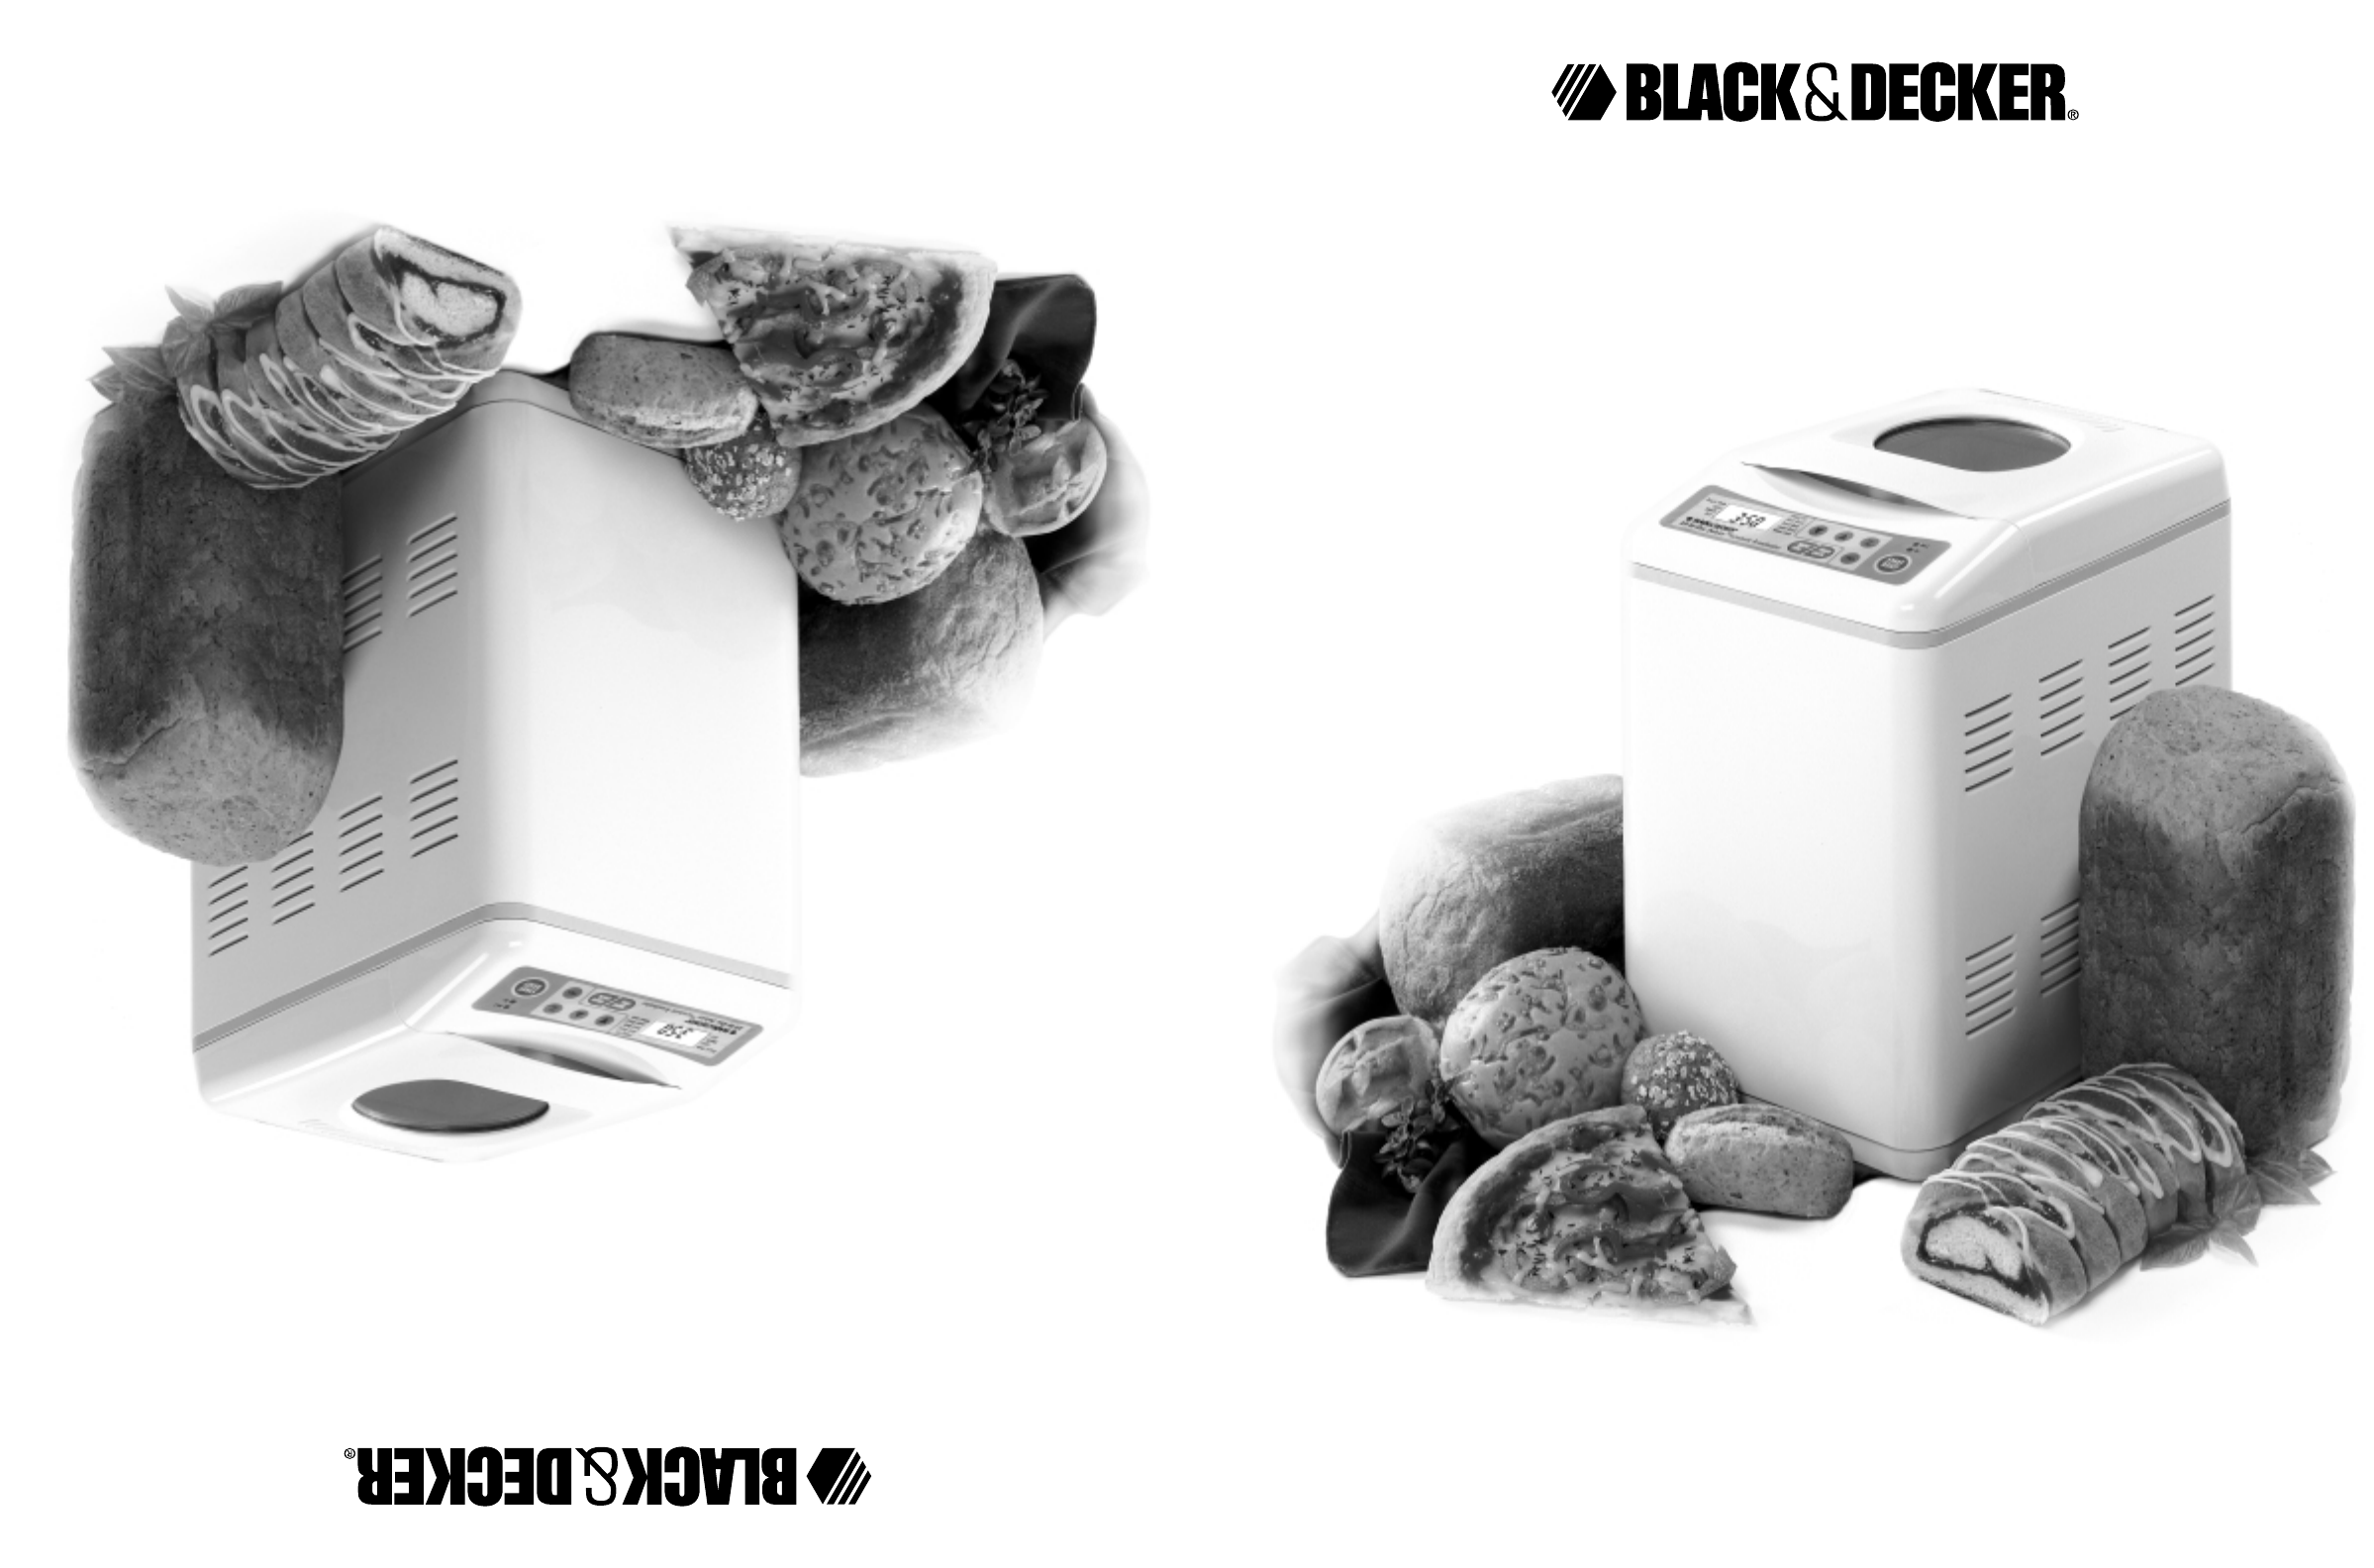 Black and decker bread maker model b1600 manual